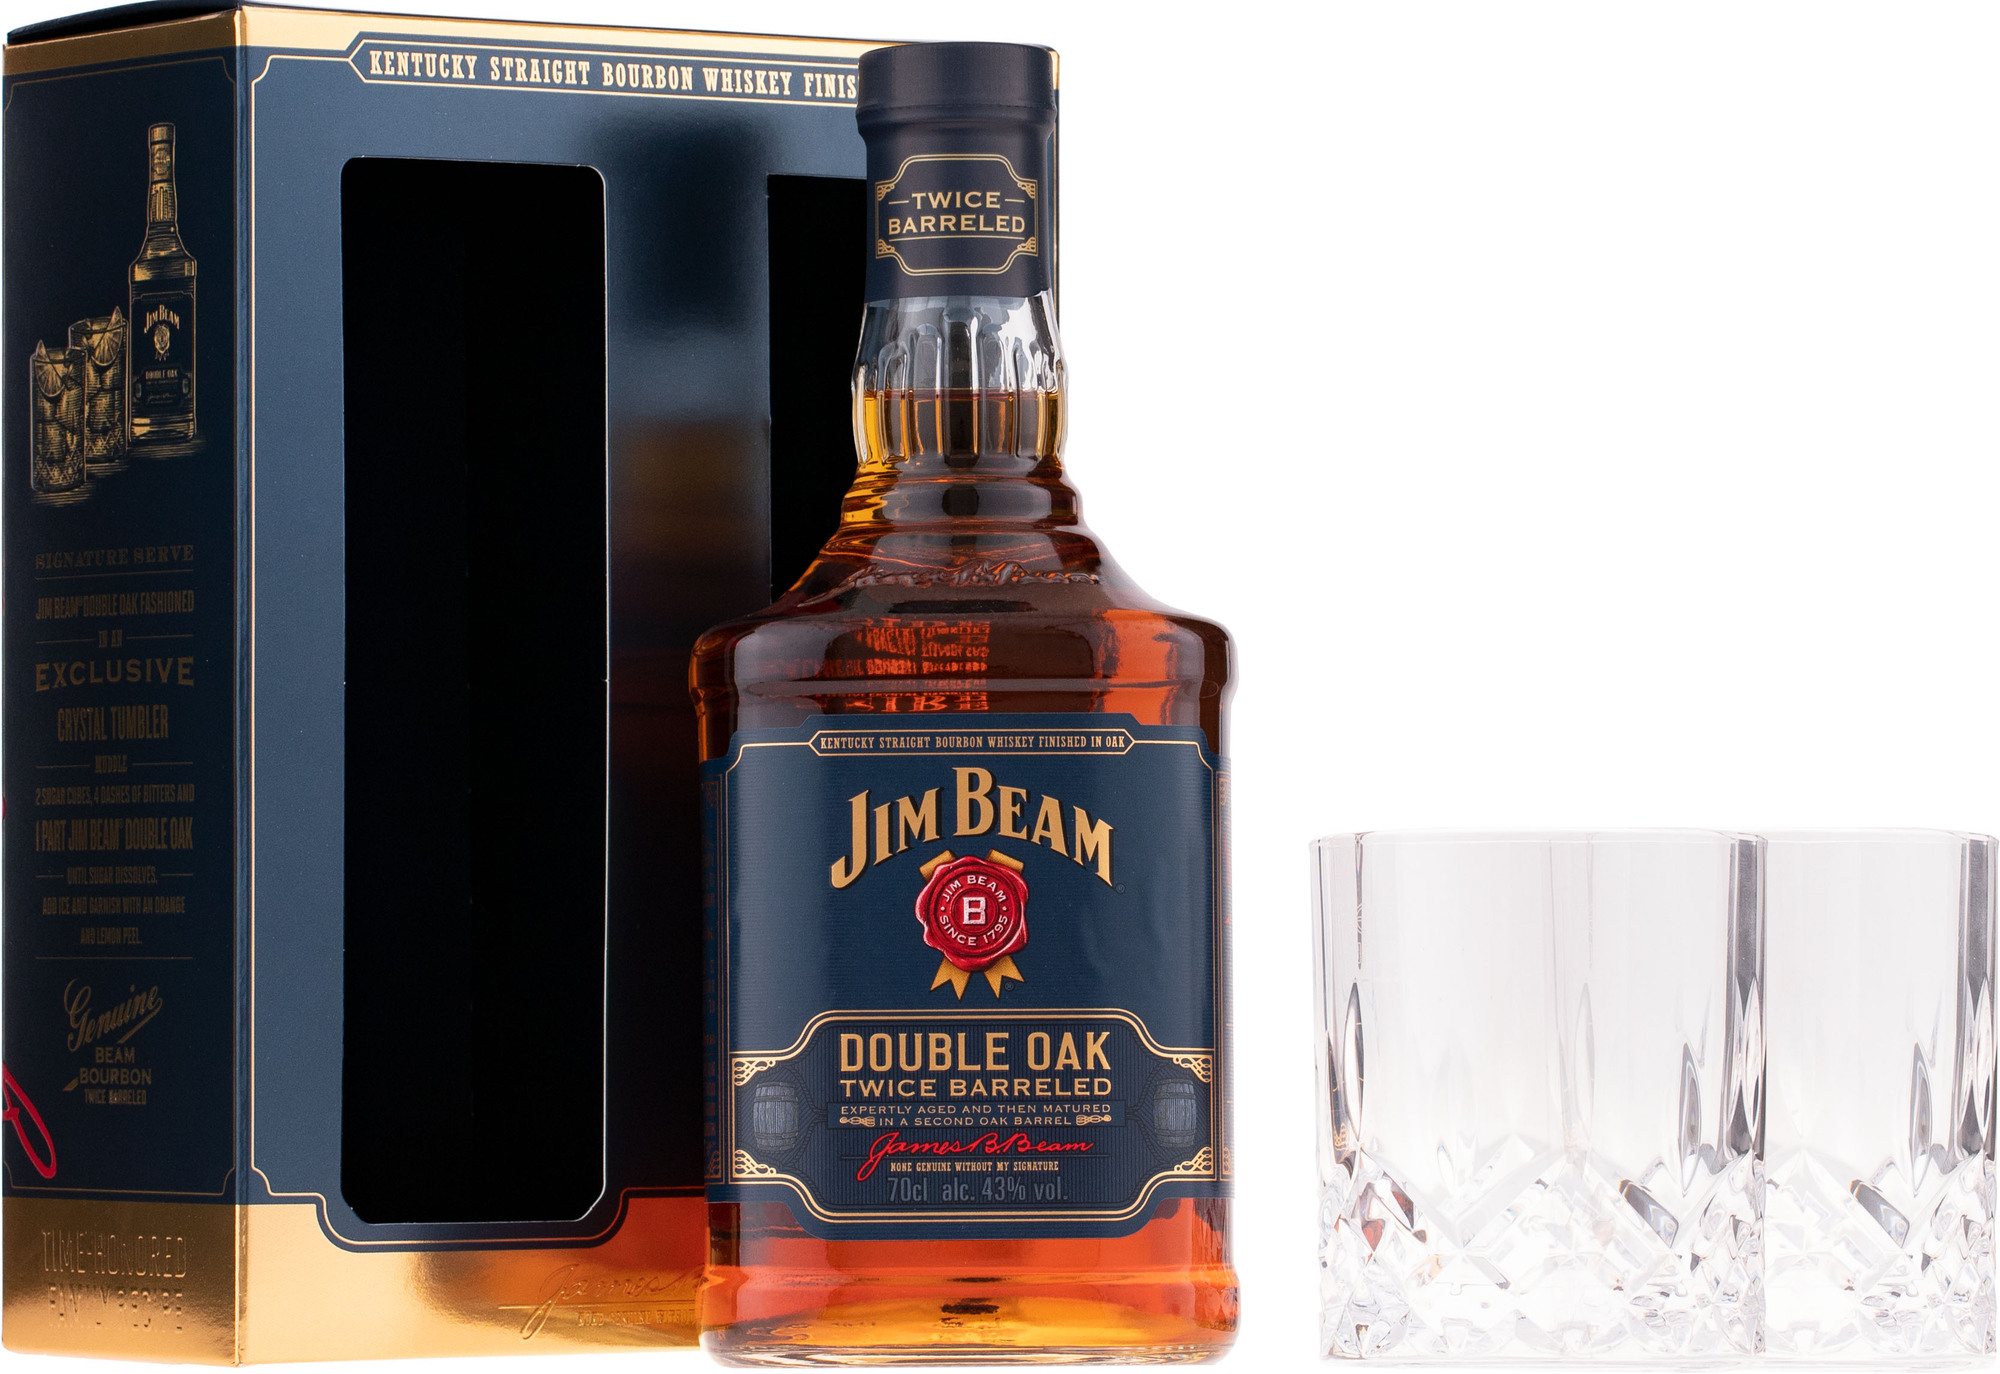 Jim Beam Double Oak Twice Barreled + 2 glasses - Bourbon Whiskey | Bondston